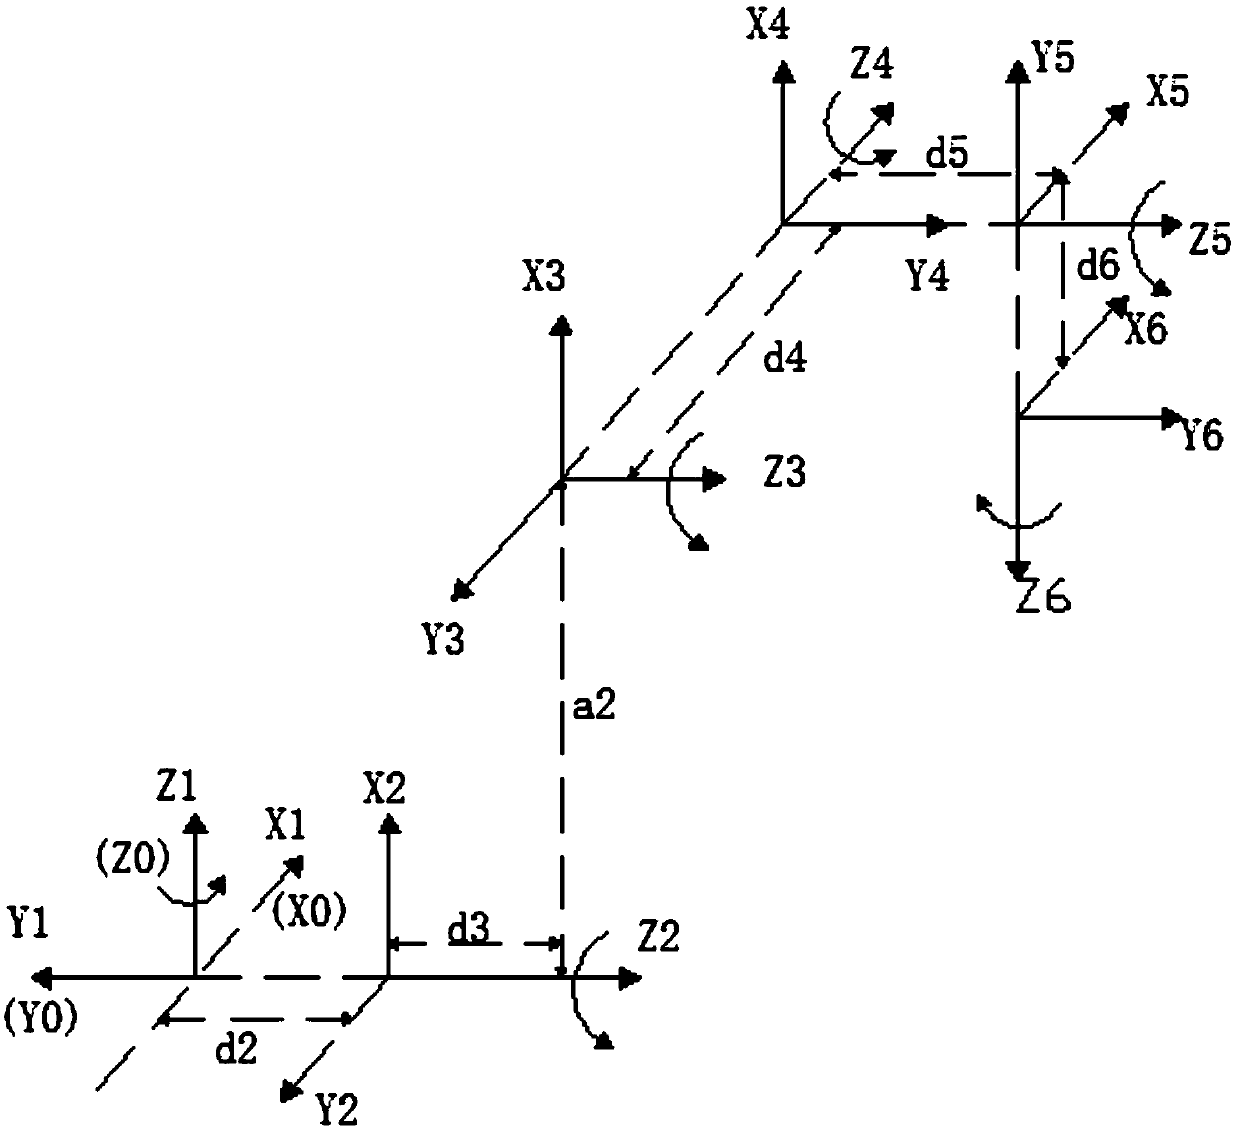 Inverse kinematics calculation method of six-freedom-degree wrist-biased serial robot